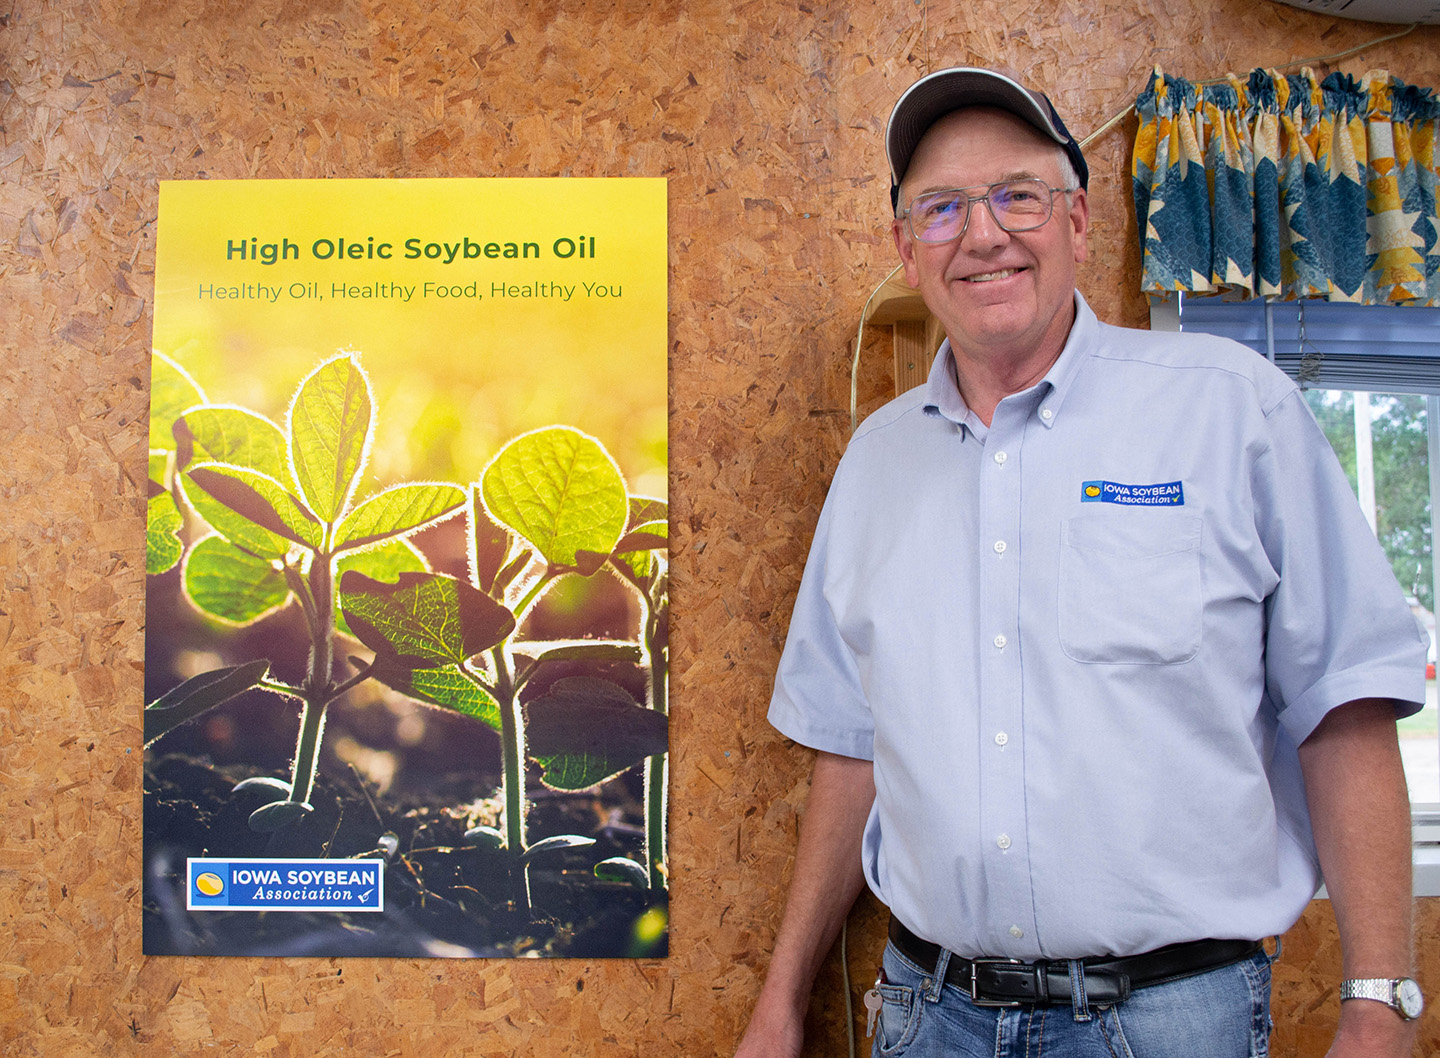 Chuck White, Iowa Soybean Association District 1 Direct